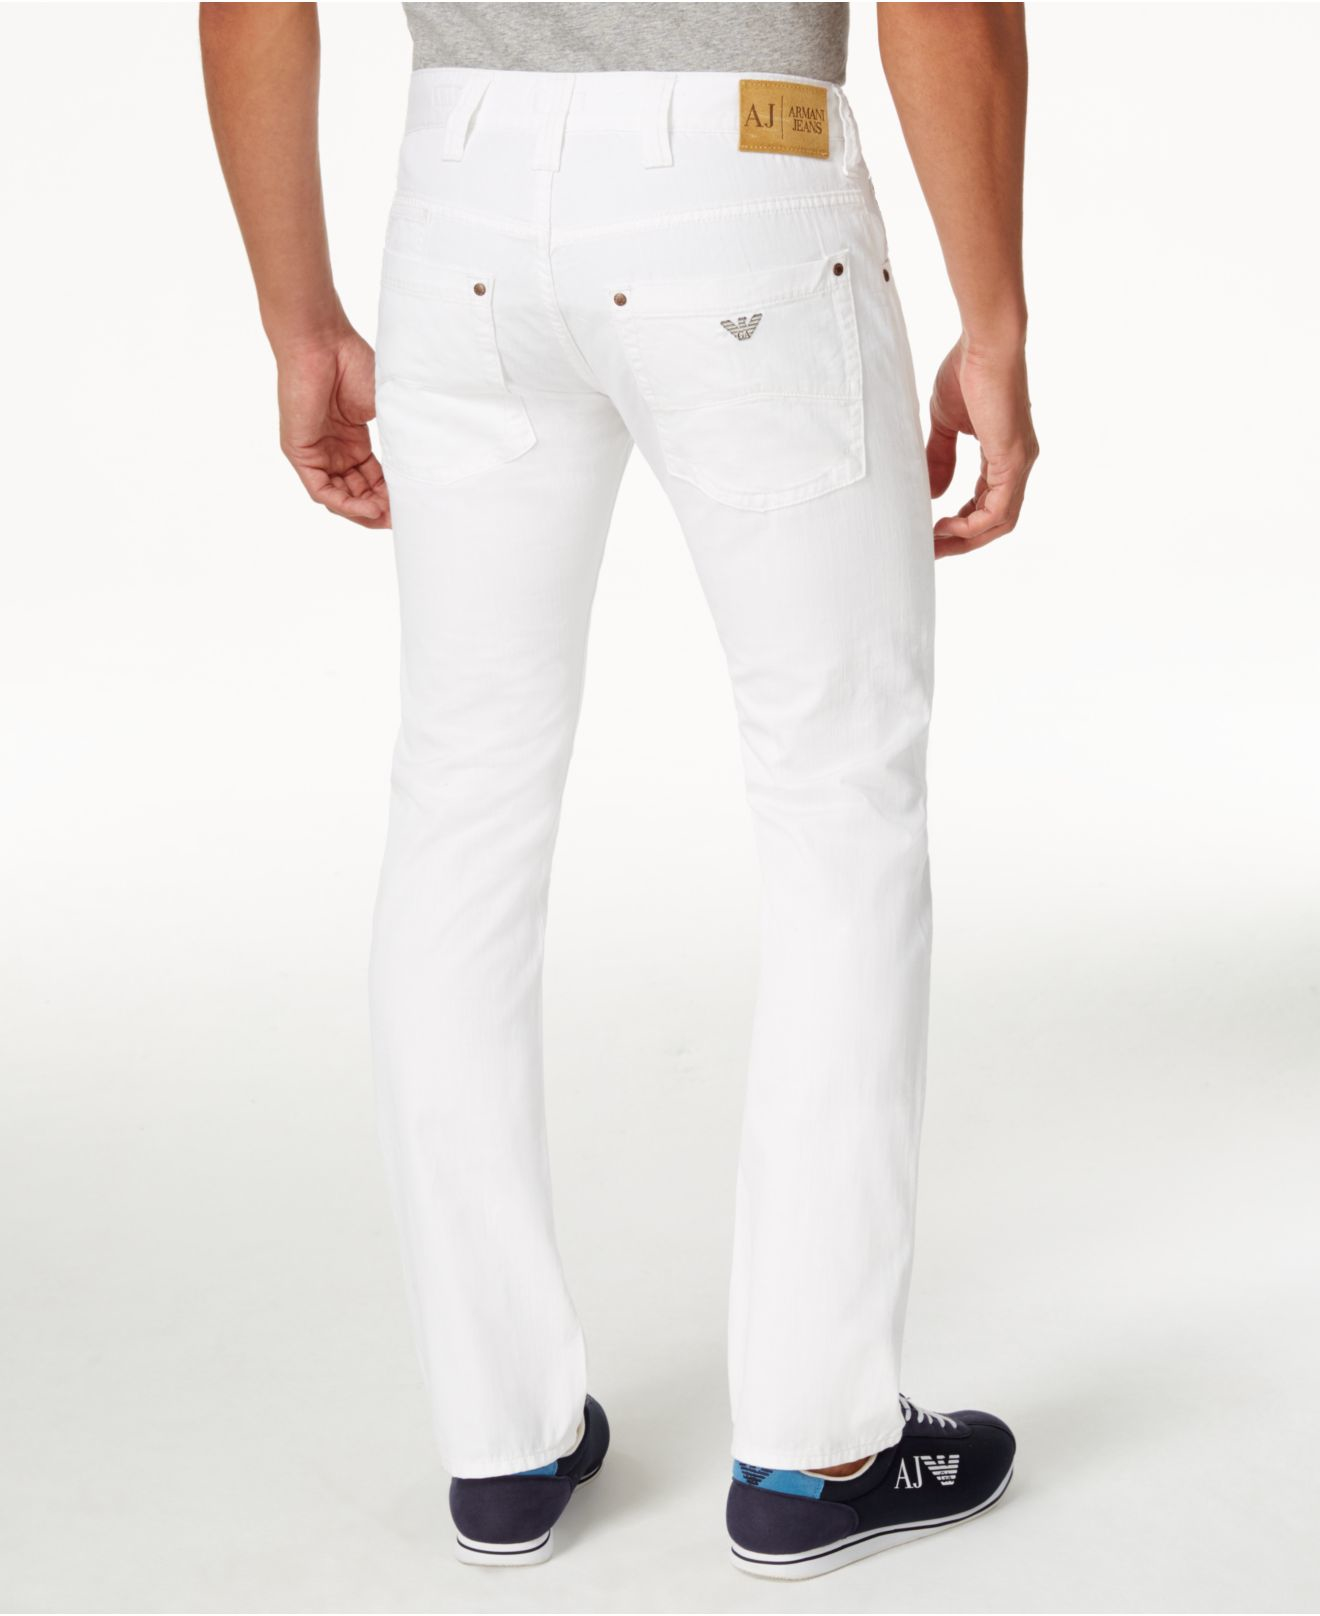 Armani Jeans Men's Slim-fit Jeans in White for Men - Lyst